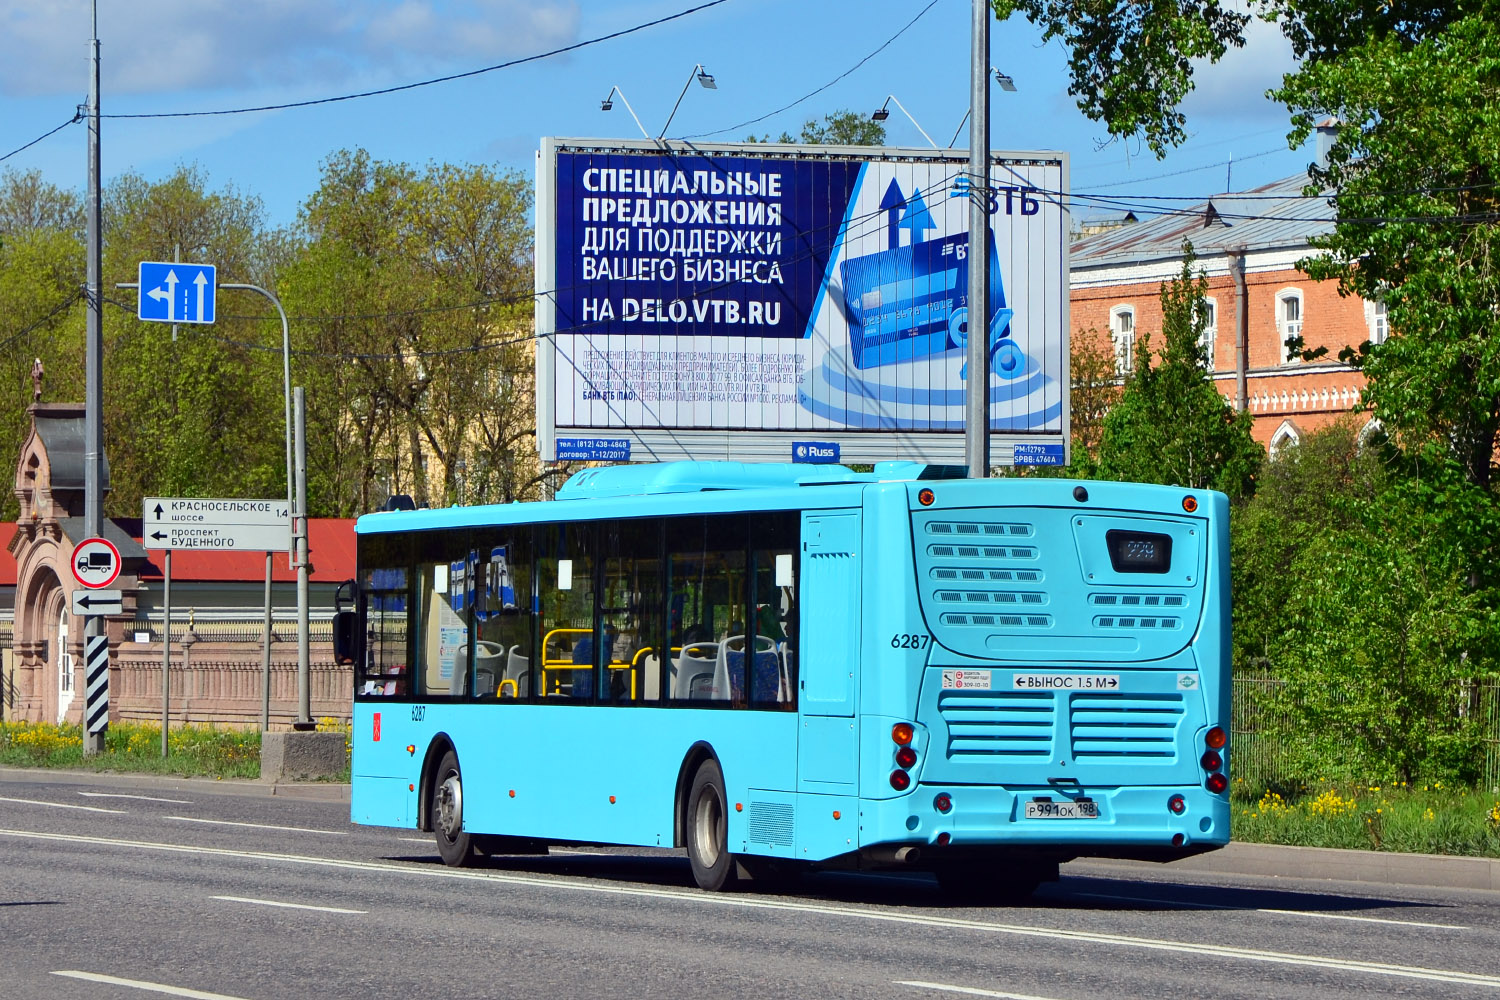 Saint Petersburg, Volgabus-5270.G2 (LNG) # 6287